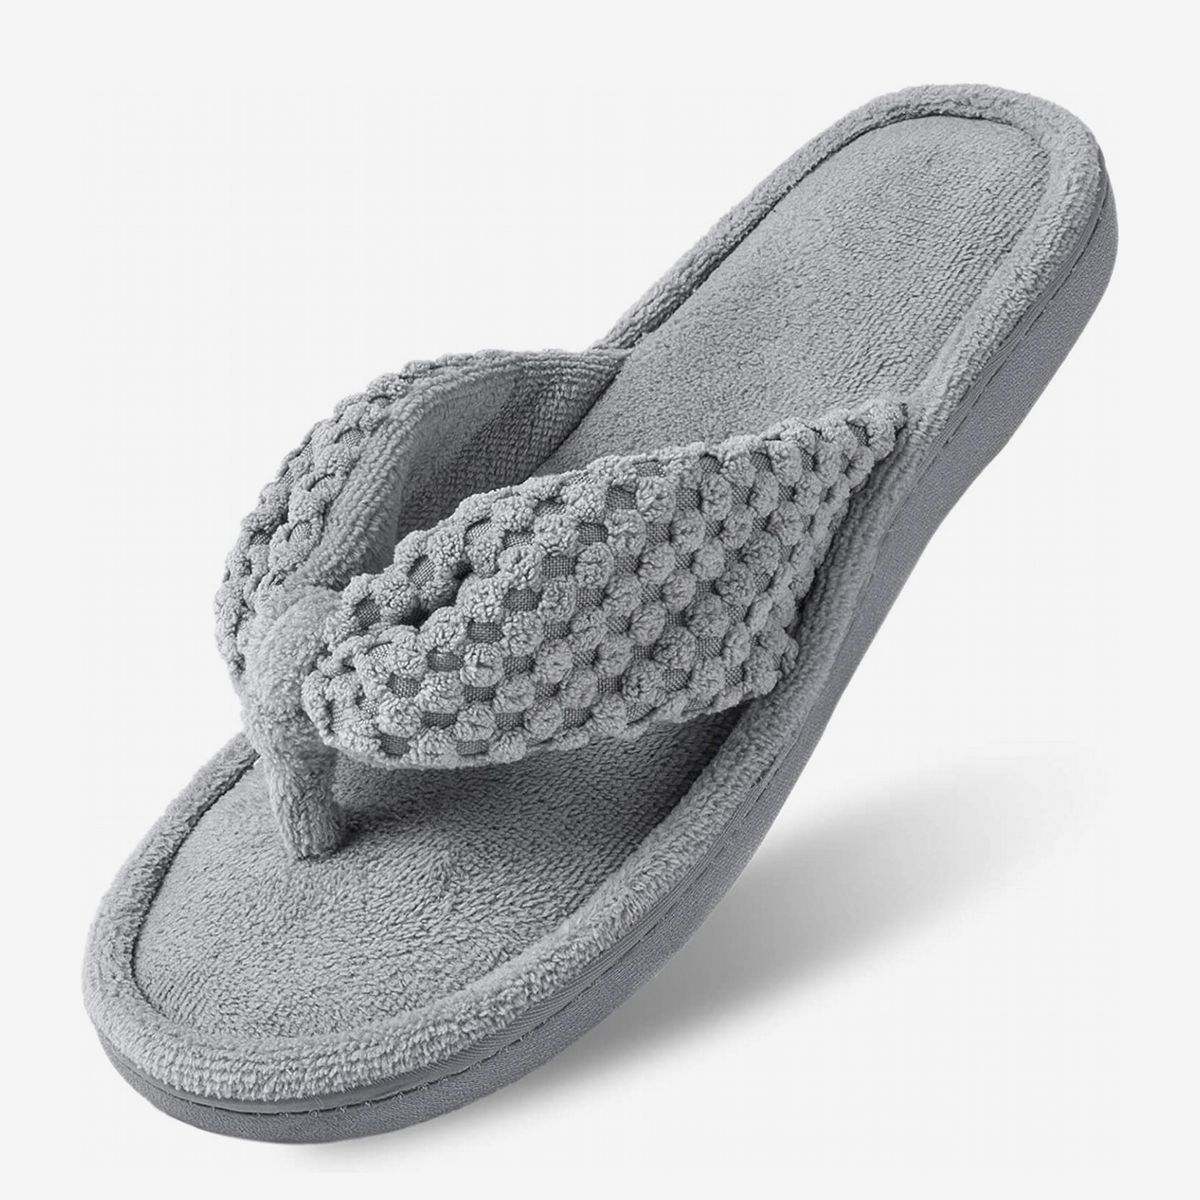 Buy > comfy ladies slippers > in stock